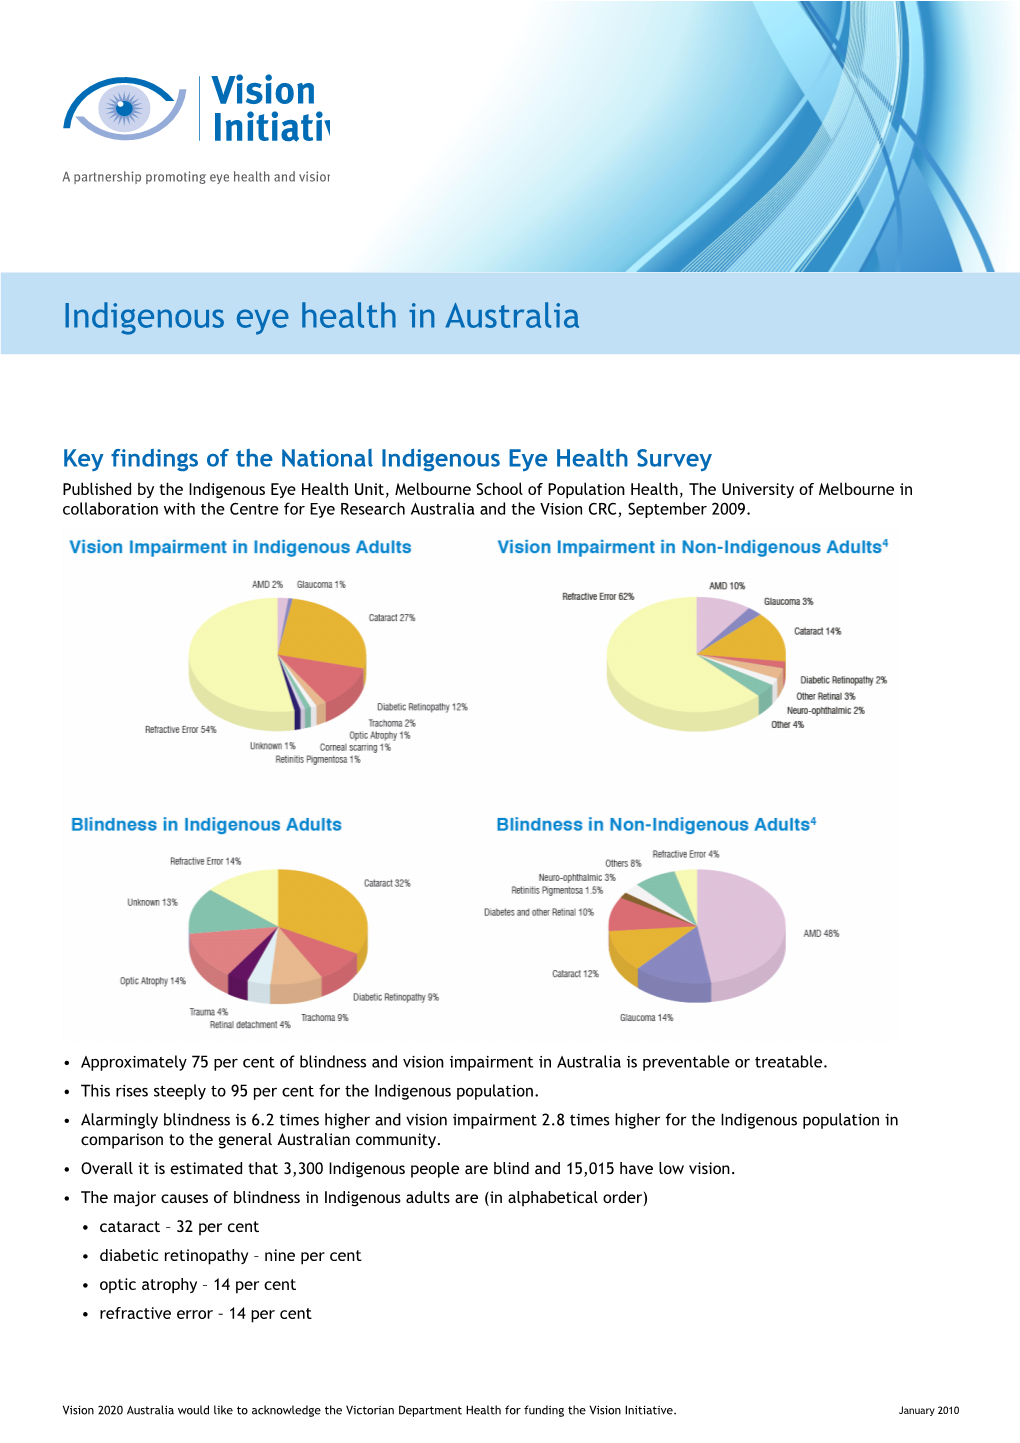 Key Findings of the National Indigenous Eye Health Survey